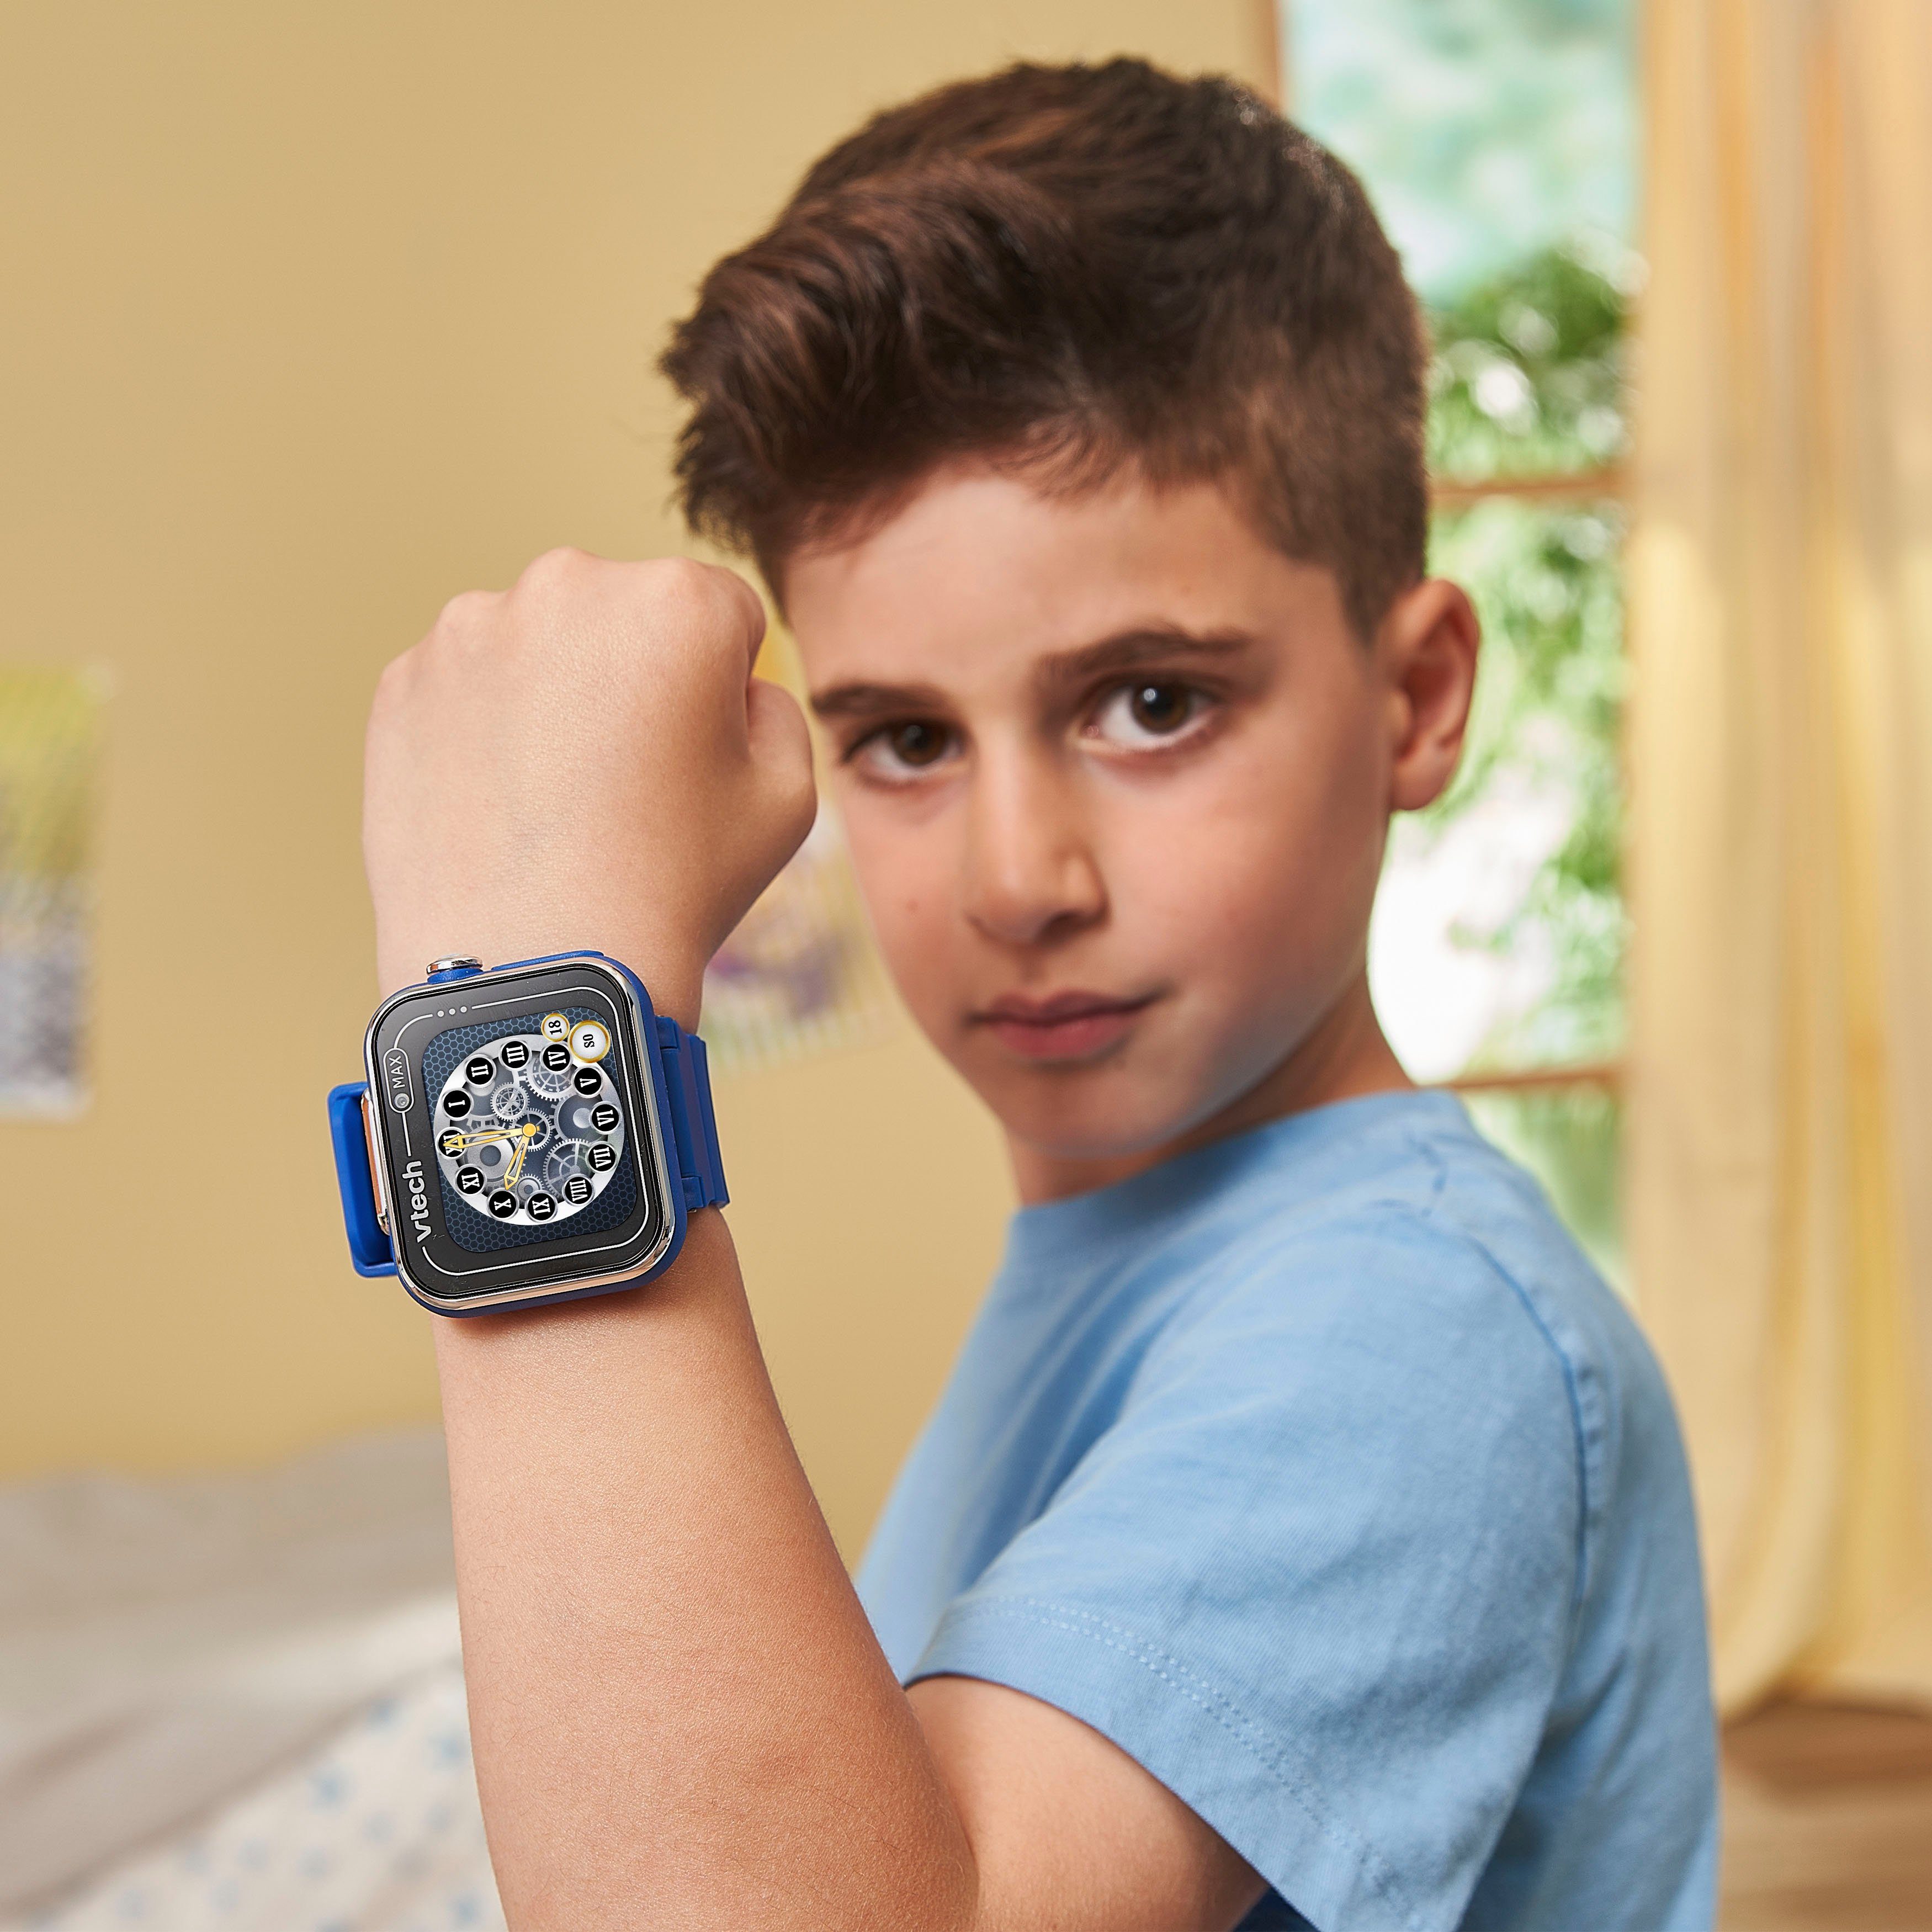 Vtech® Lernspielzeug KidiZoom MAX Watch Smart blau